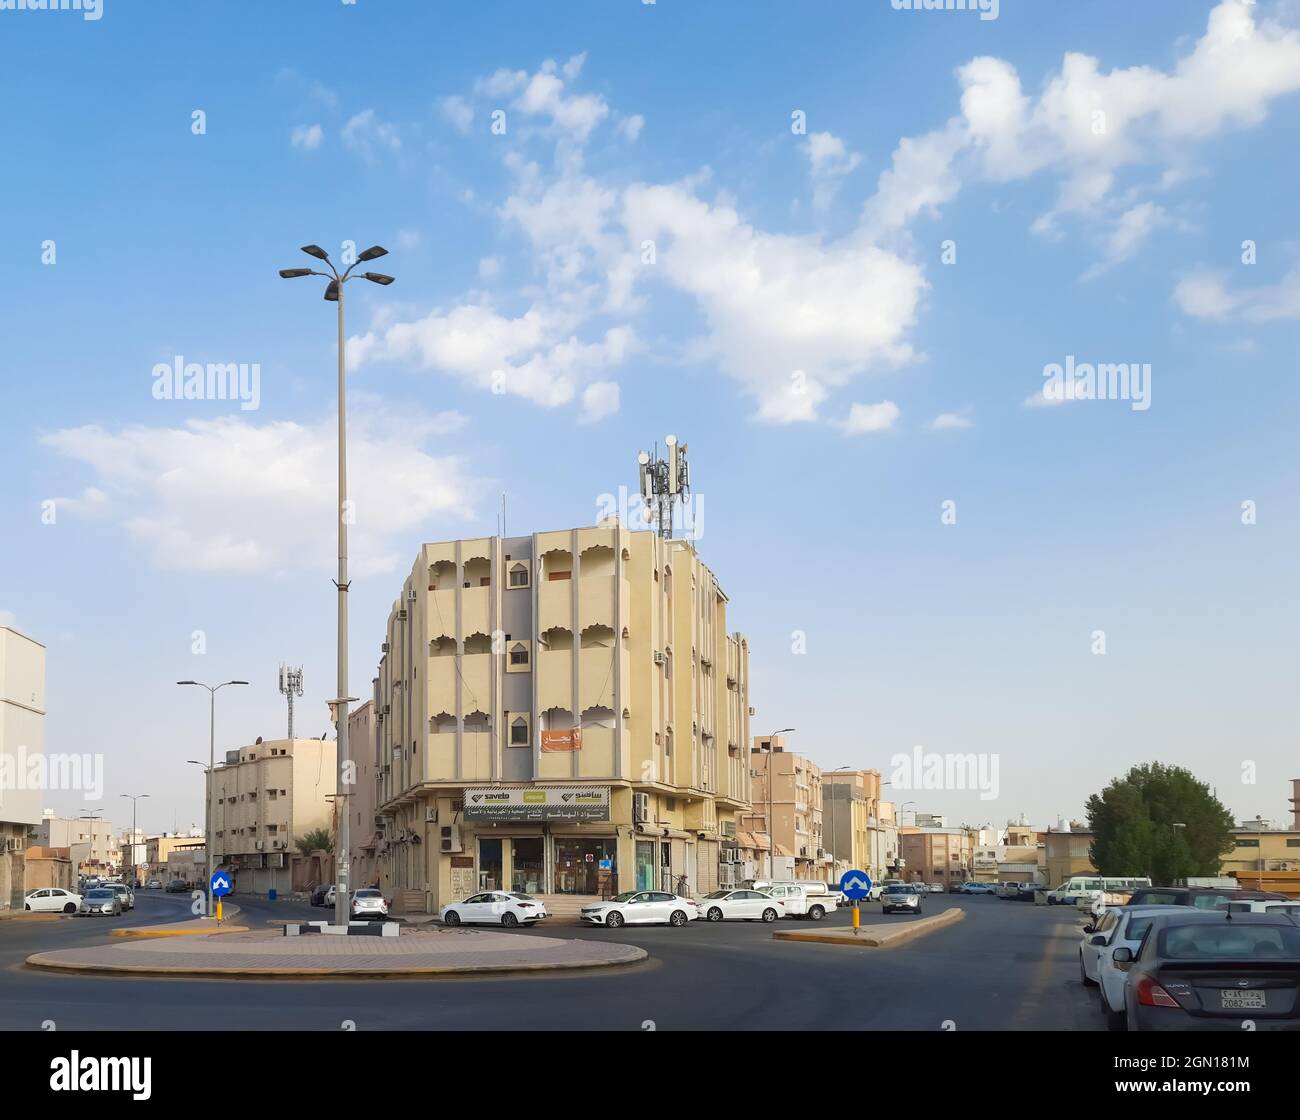 HOFUF AL HASA, SAUDI ARABIA - Aug 02, 2021: A view of a street with cars and buildings in Hofuf al Hasa, Saudi Arabia Stock Photo